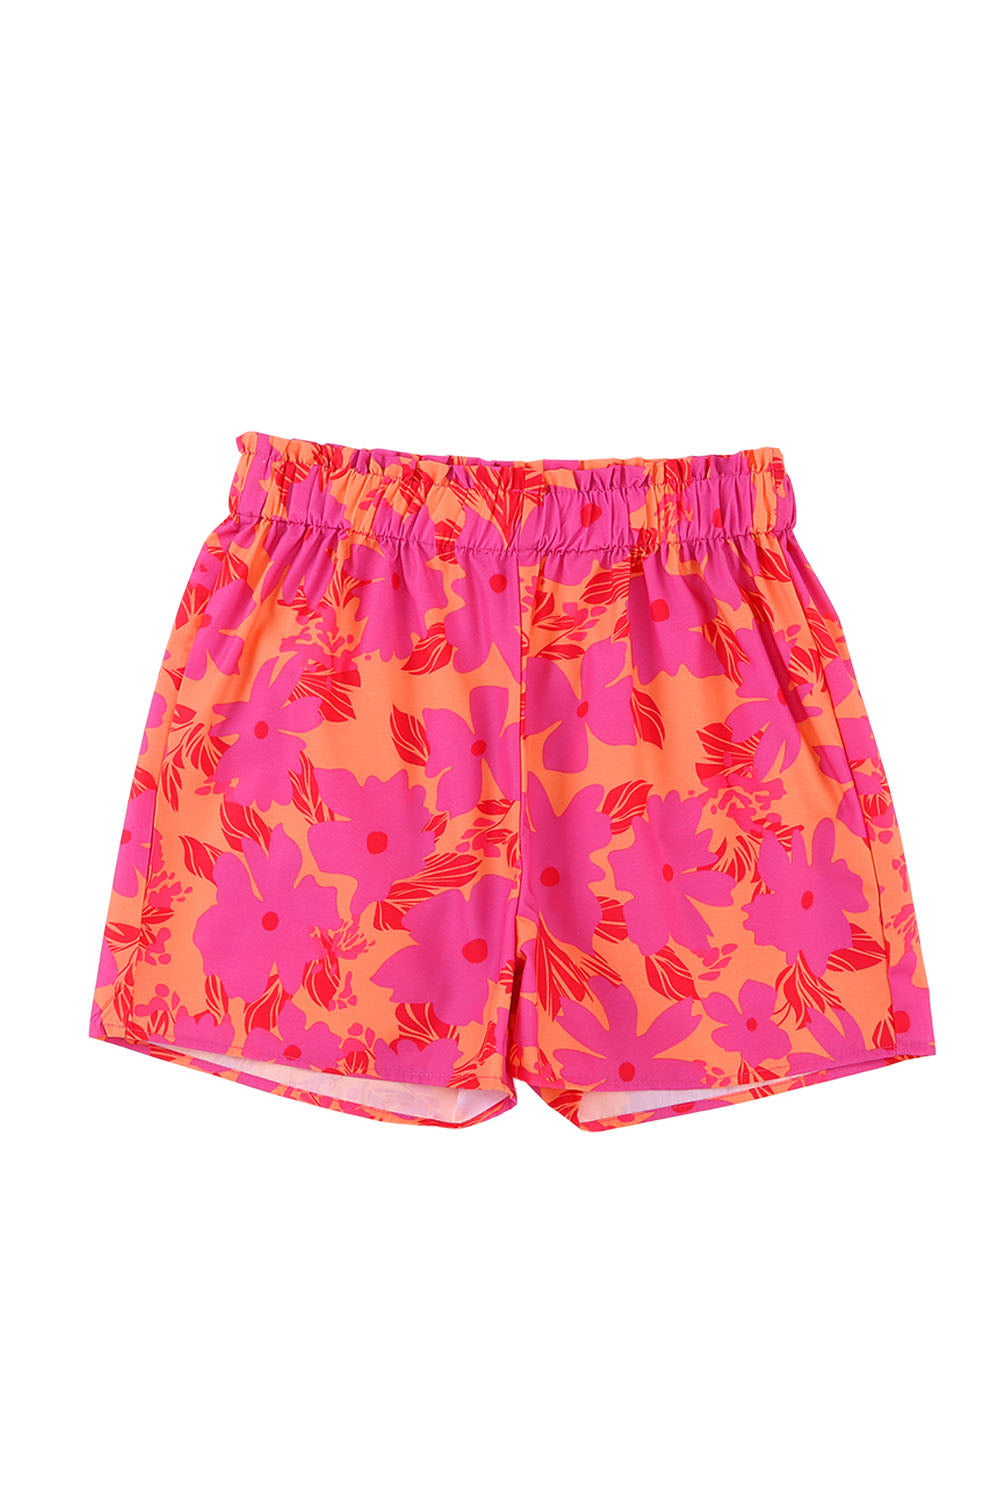 Pink Floral Print Smocked Waist Shorts